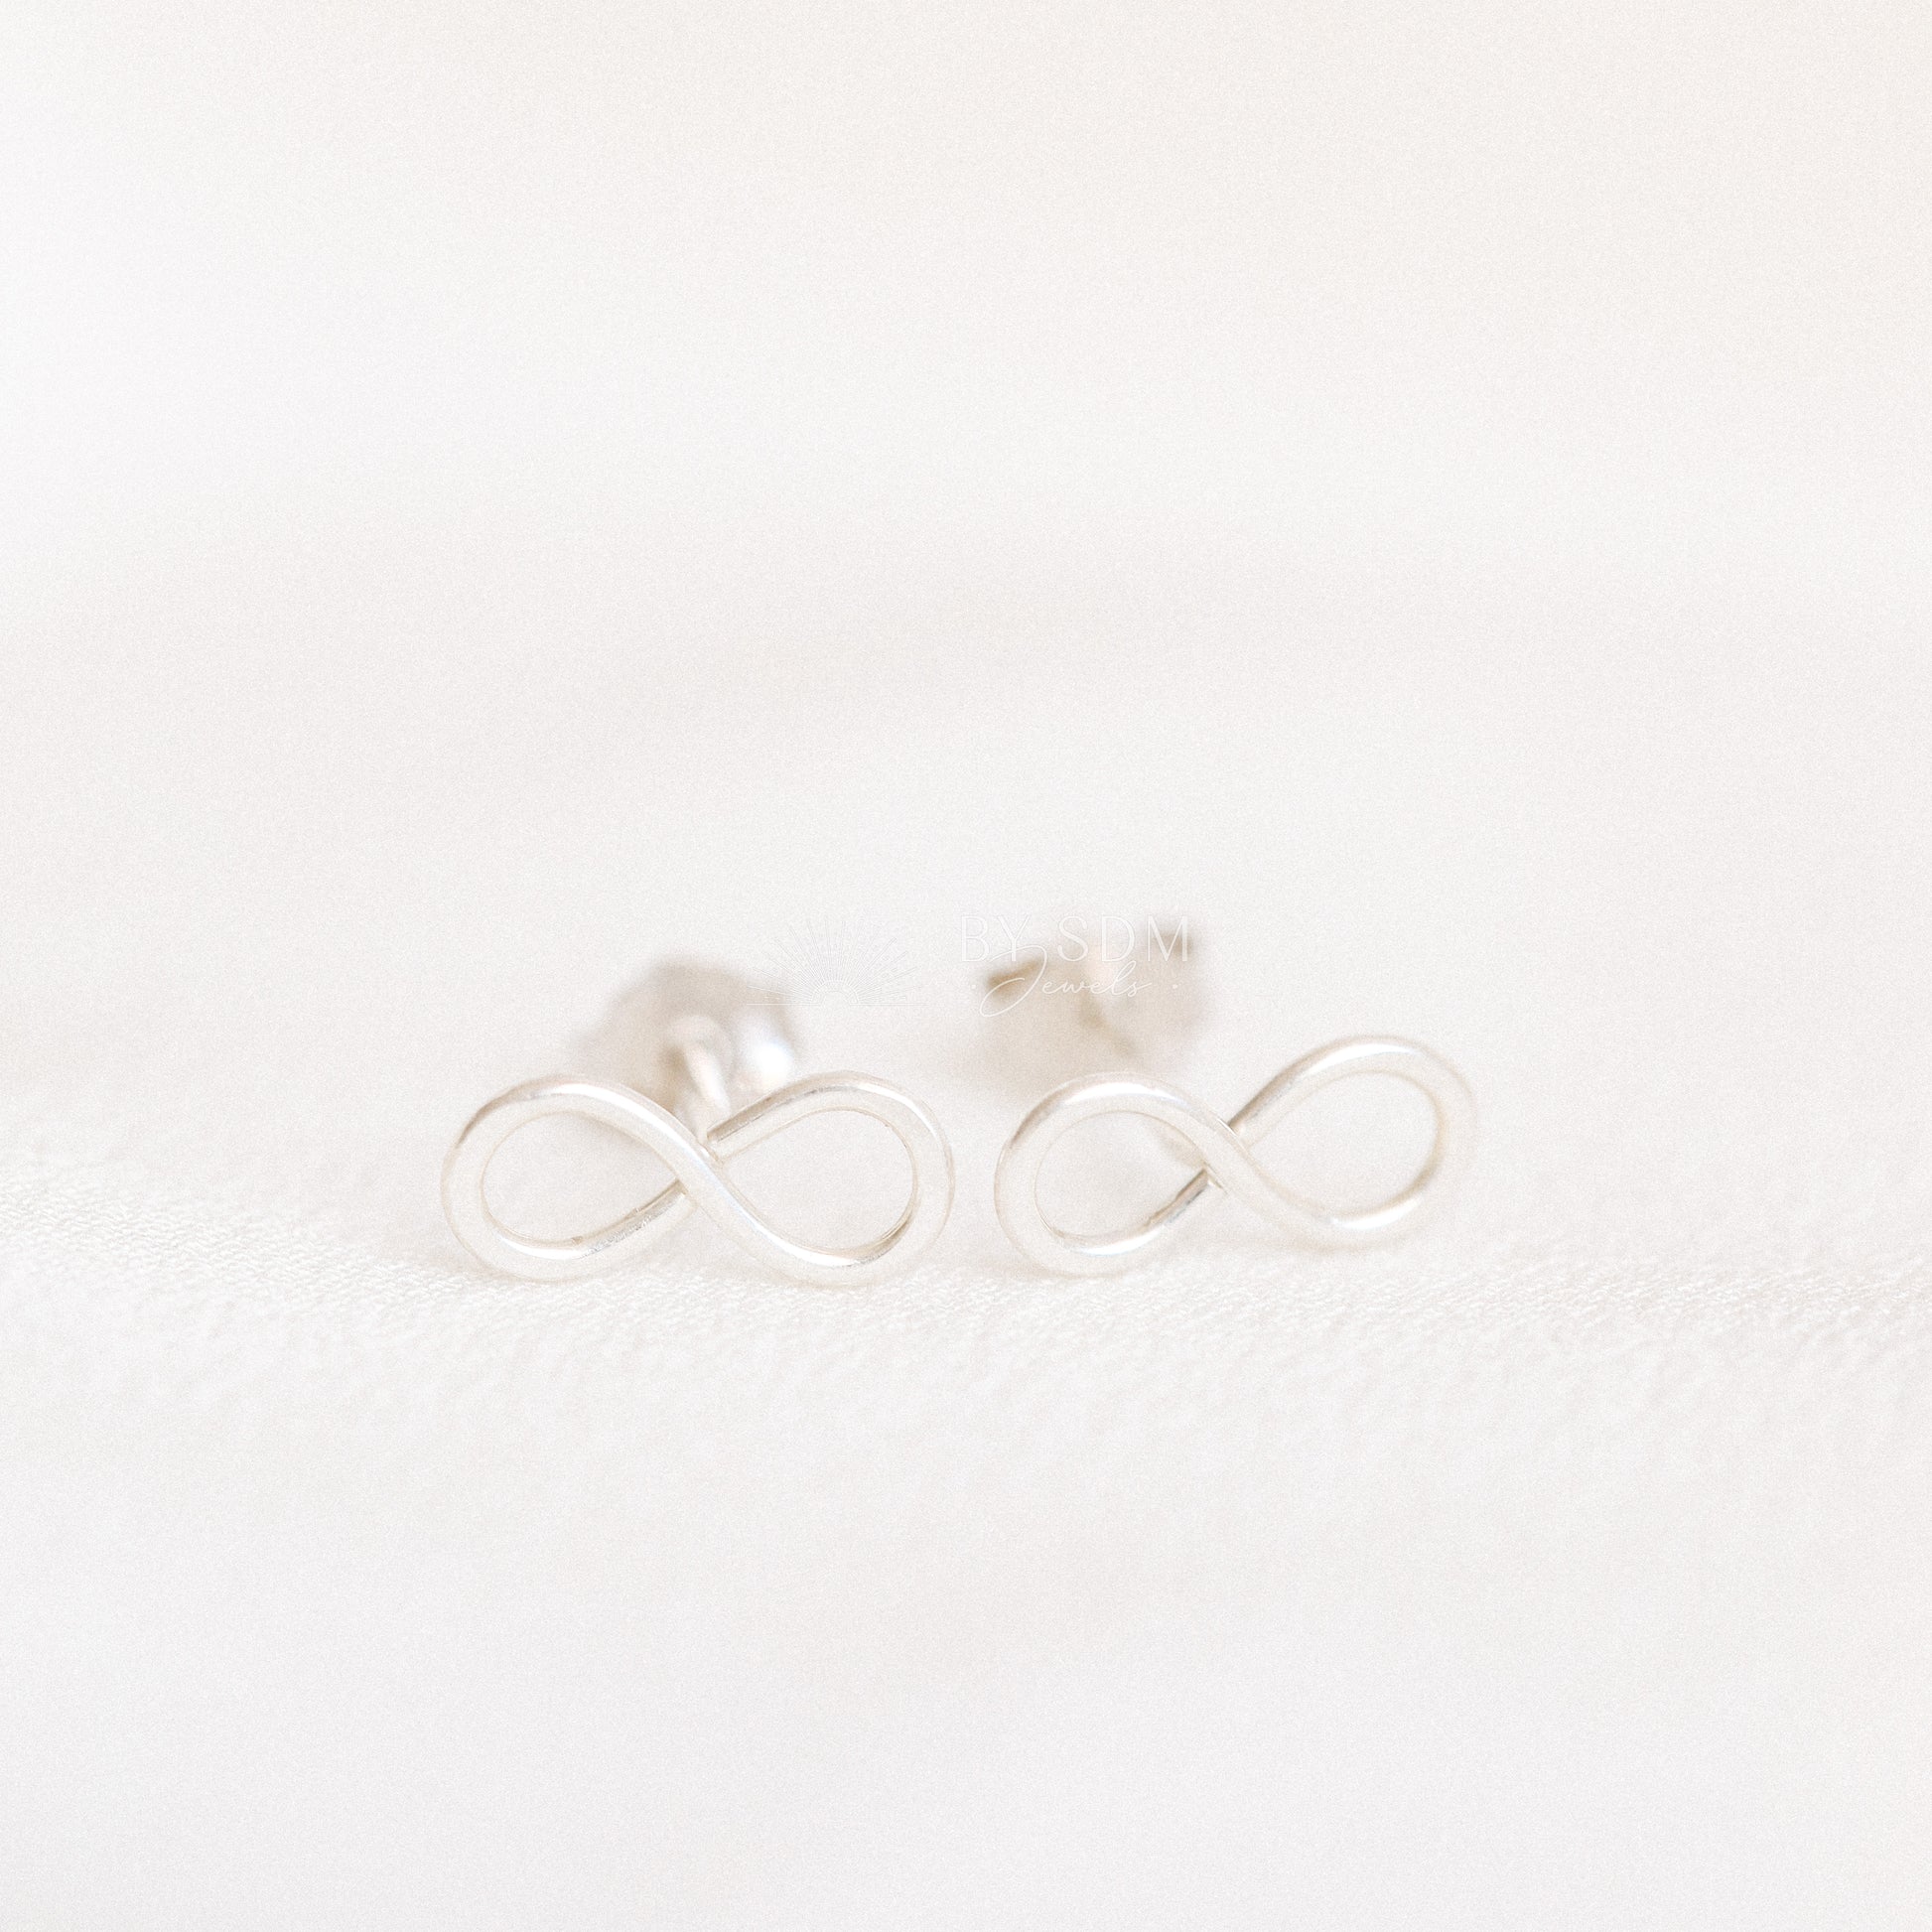 Tiny Infinity Stud Earrings Delicate 925 Sterling Silver 8 Earrings 9mm Infinity Stud Earrings Symbol of Eternity Earrings Gift for Her